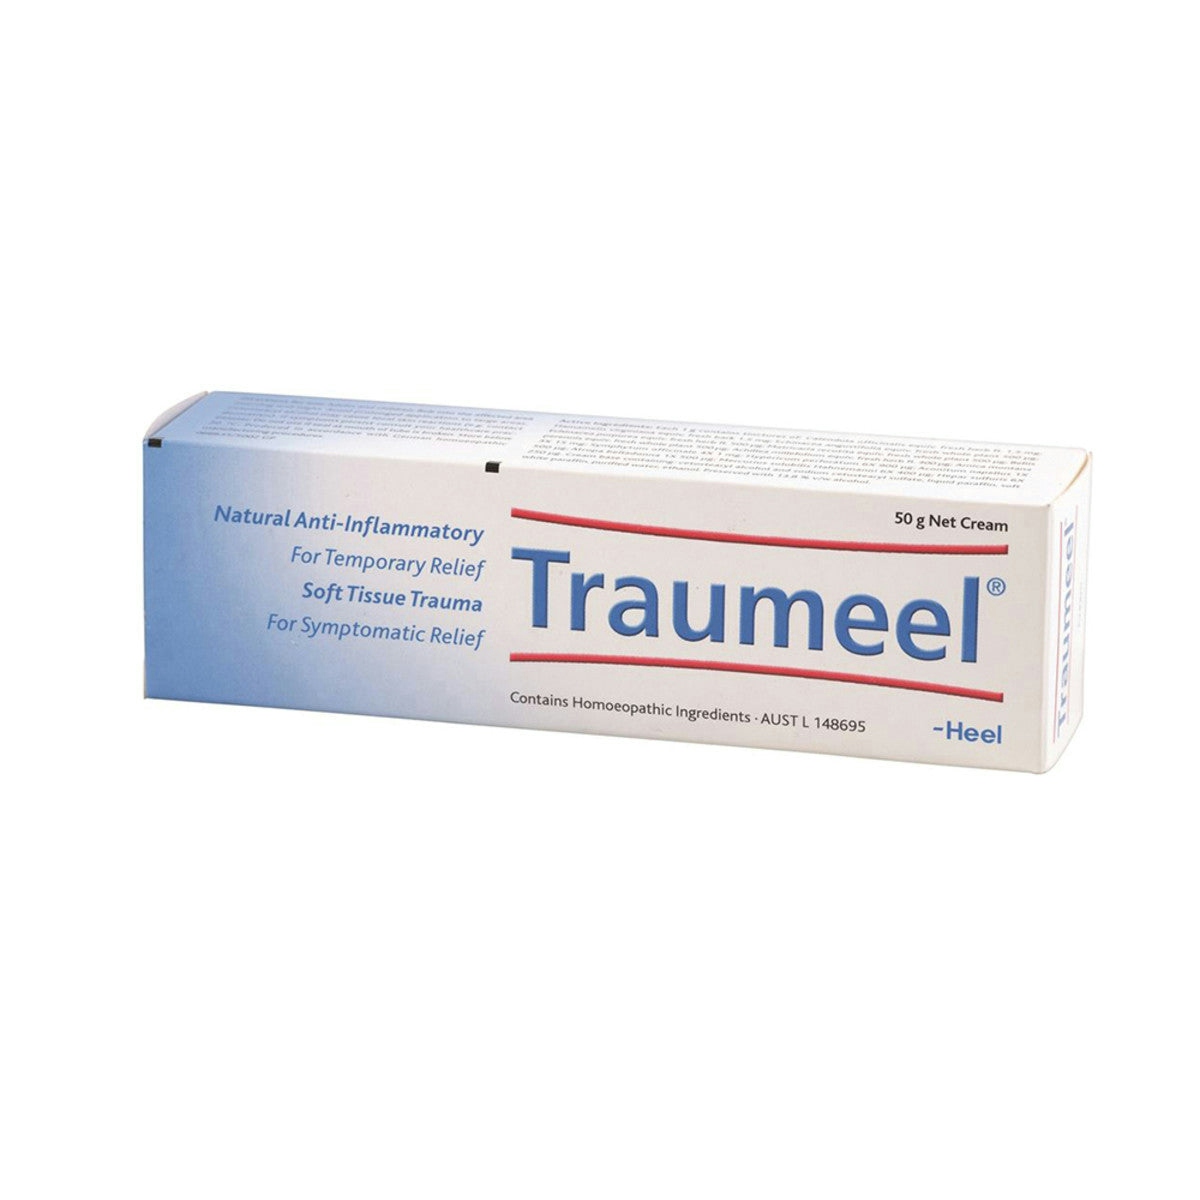 image of Heel Traumeel Cream 50g on white background 